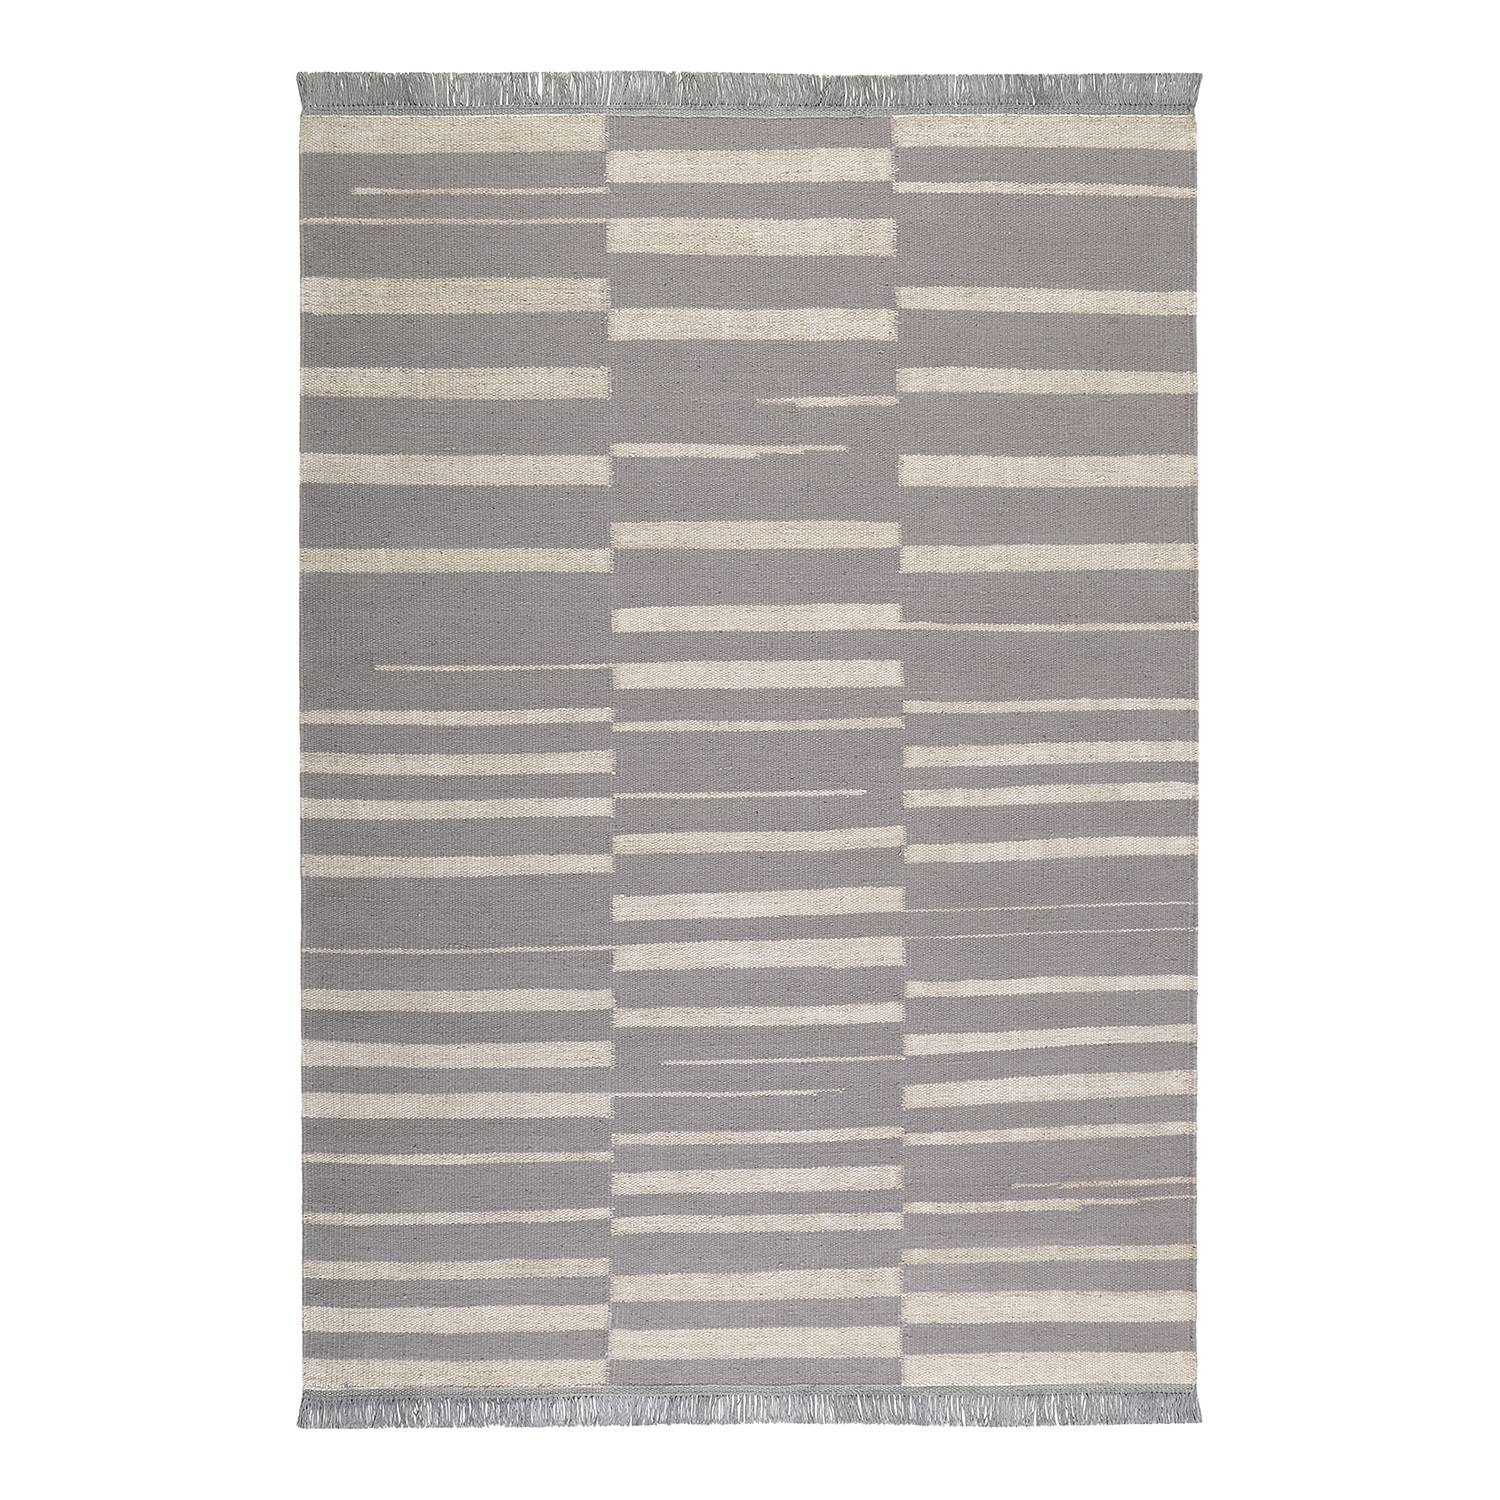 Teppich Skid Marks (handgewebt) - Mischgewebe - Grau / Creme - 130 x 190 cm, carpets&co